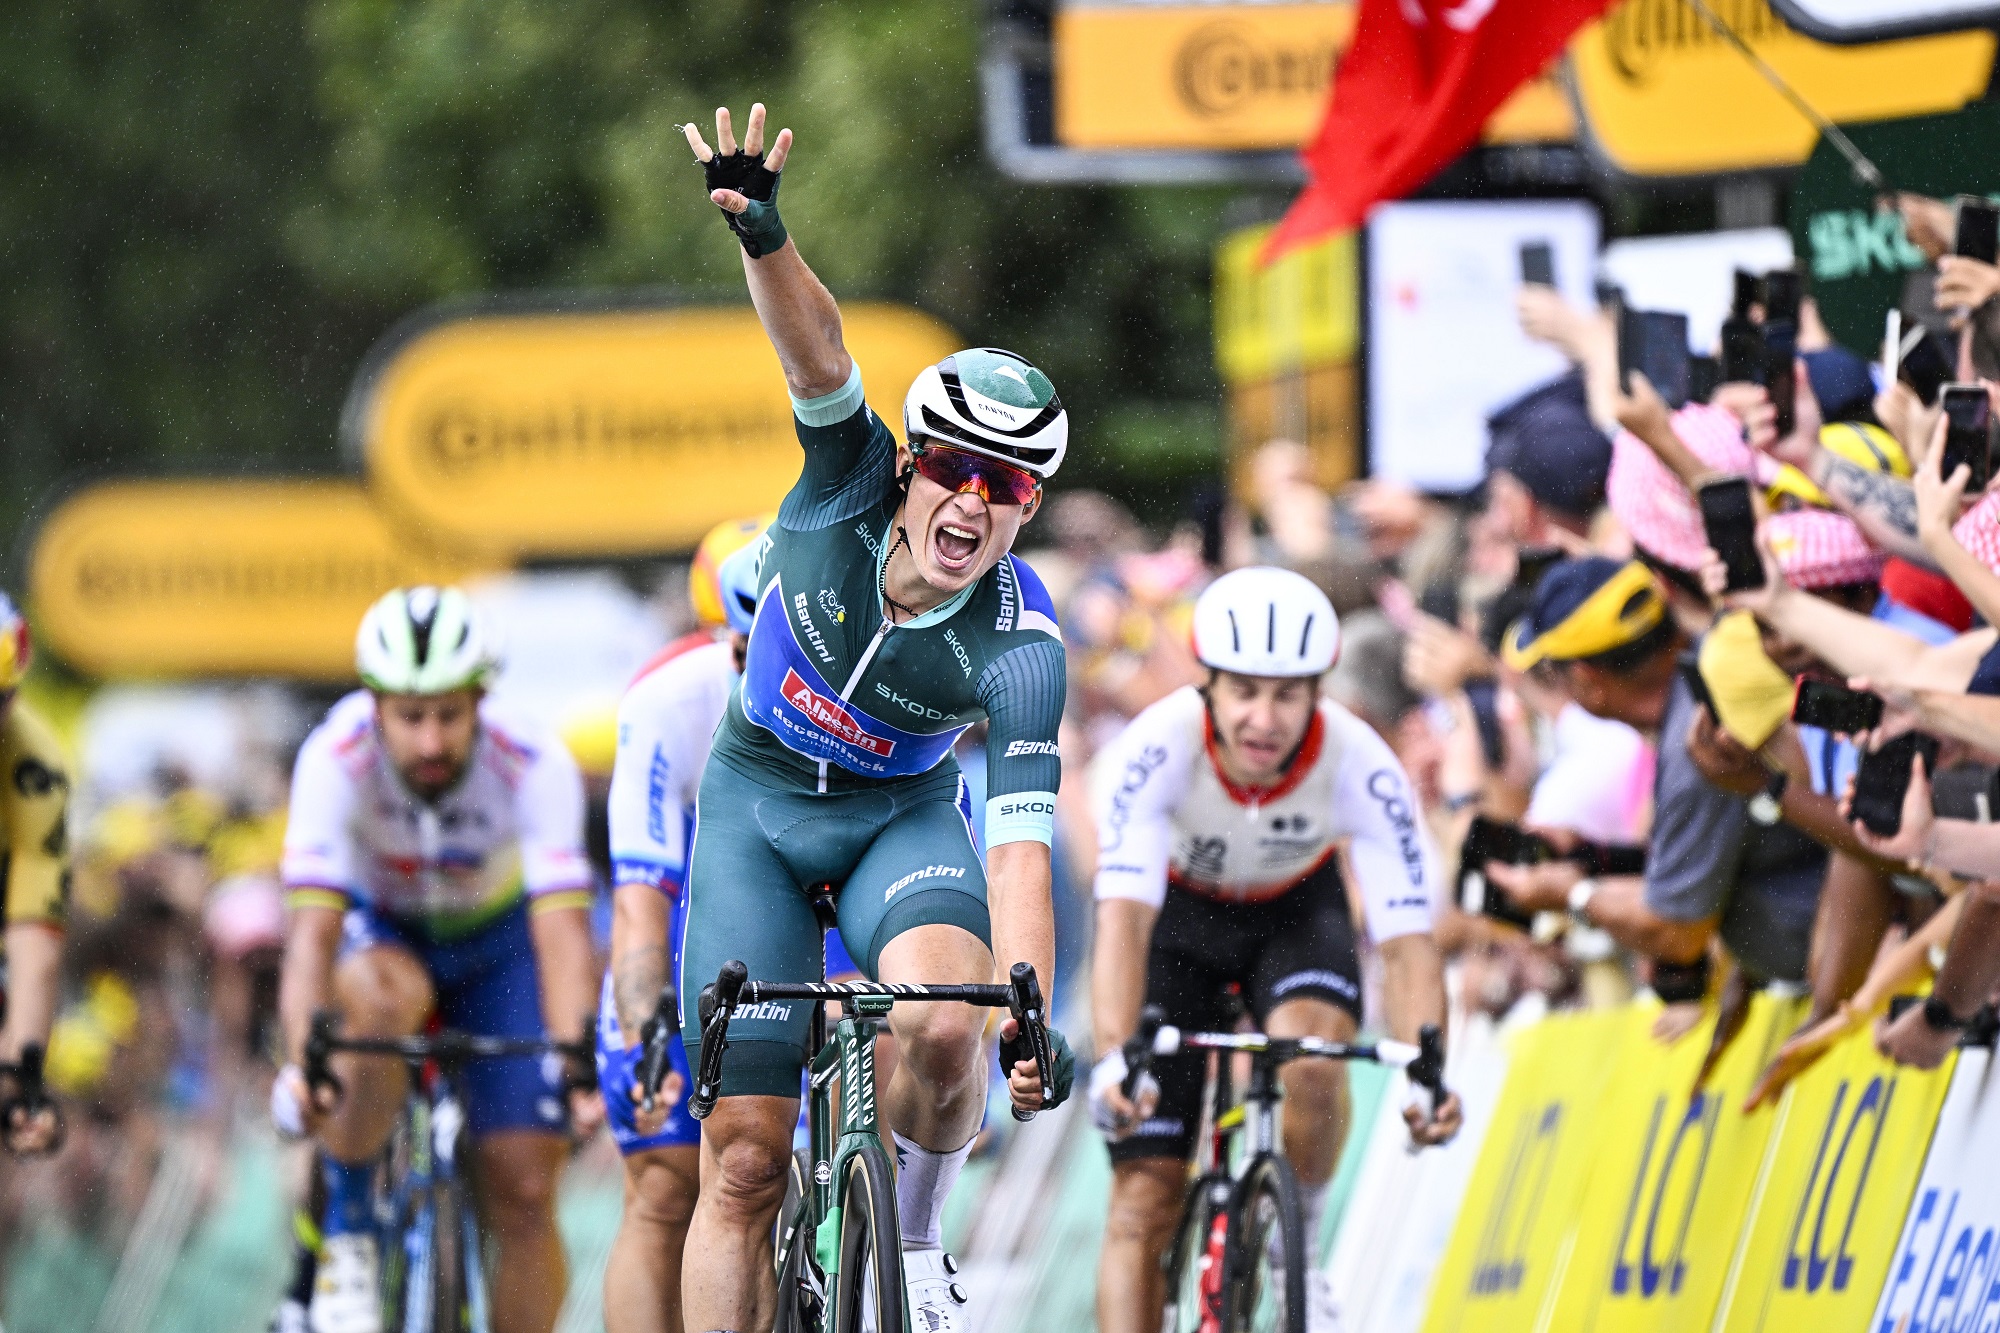 Jasper Philipsen lässt Belgien schon zum vierten Mal jubeln bei der 110. Tour de France (Bild: Jasper Jacobs/Belga)